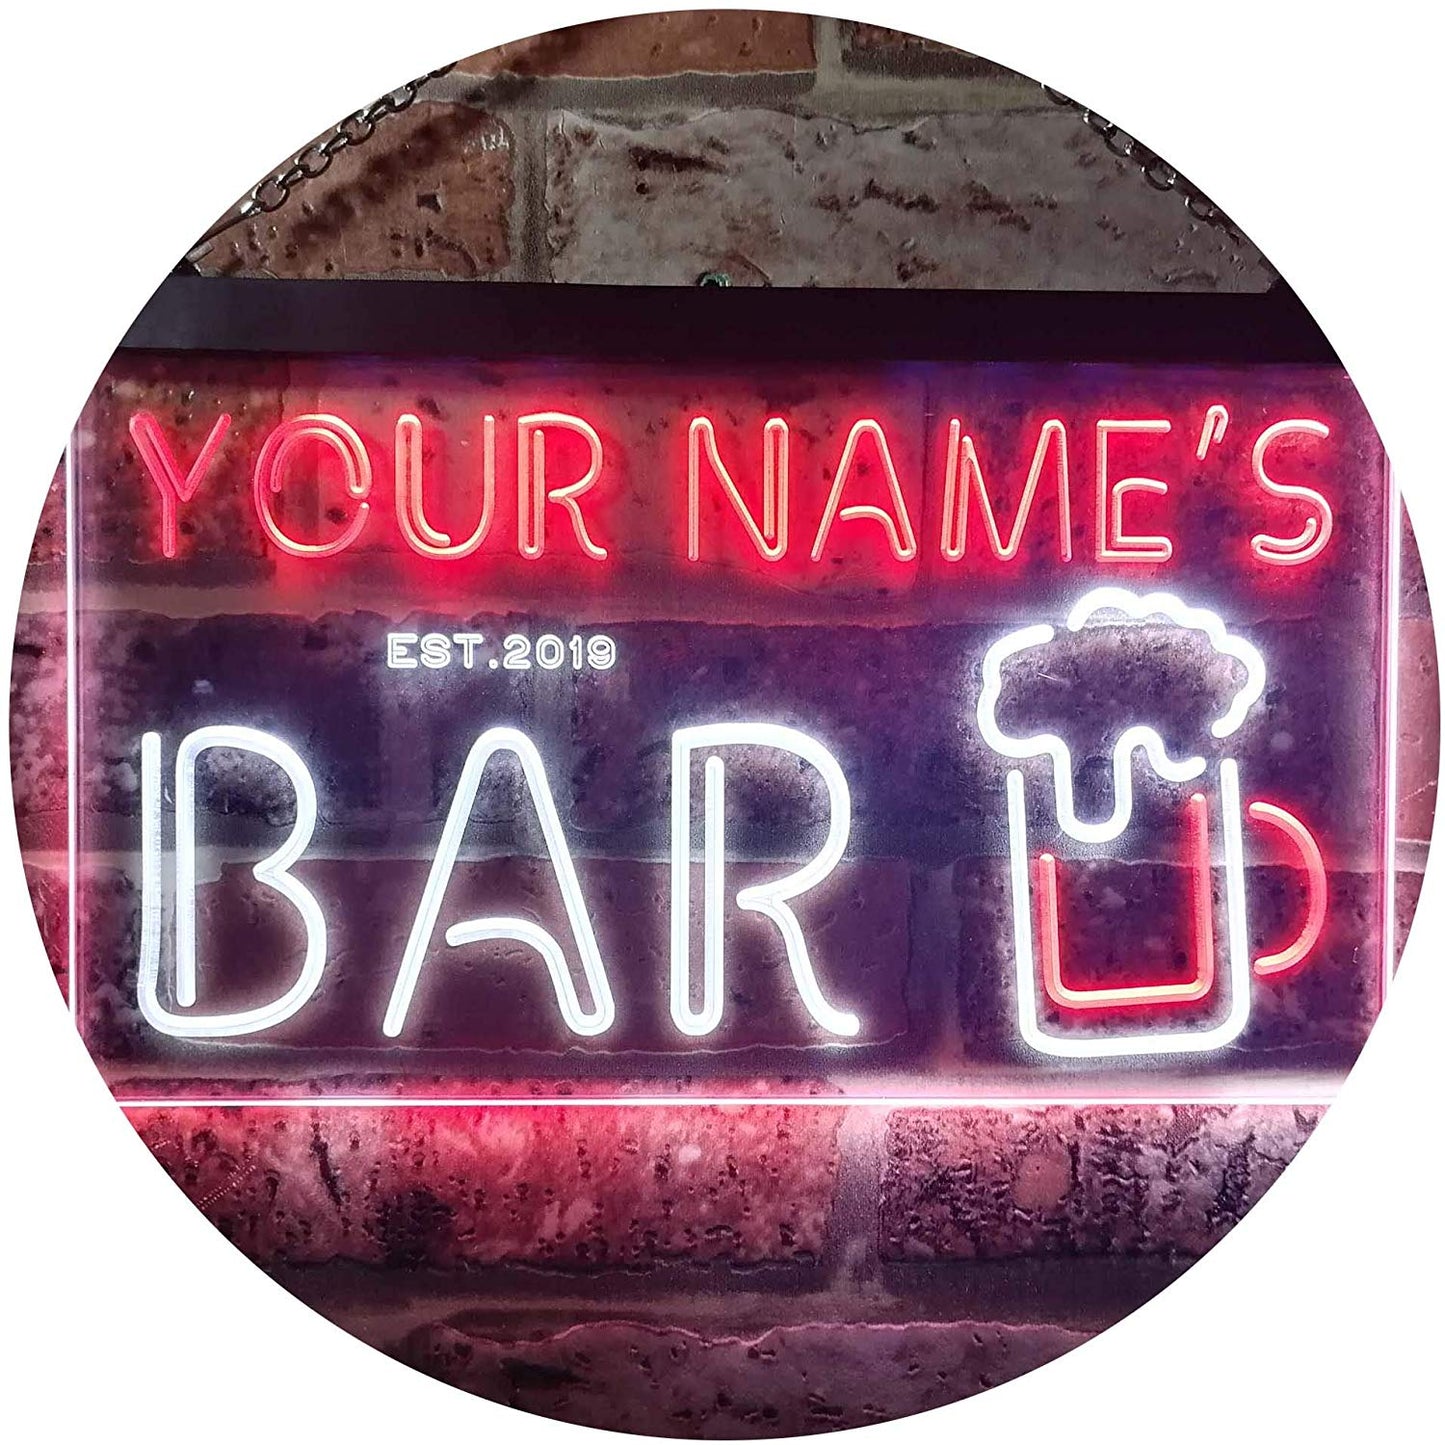 Custom Bar LED Neon Light Sign - Way Up Gifts